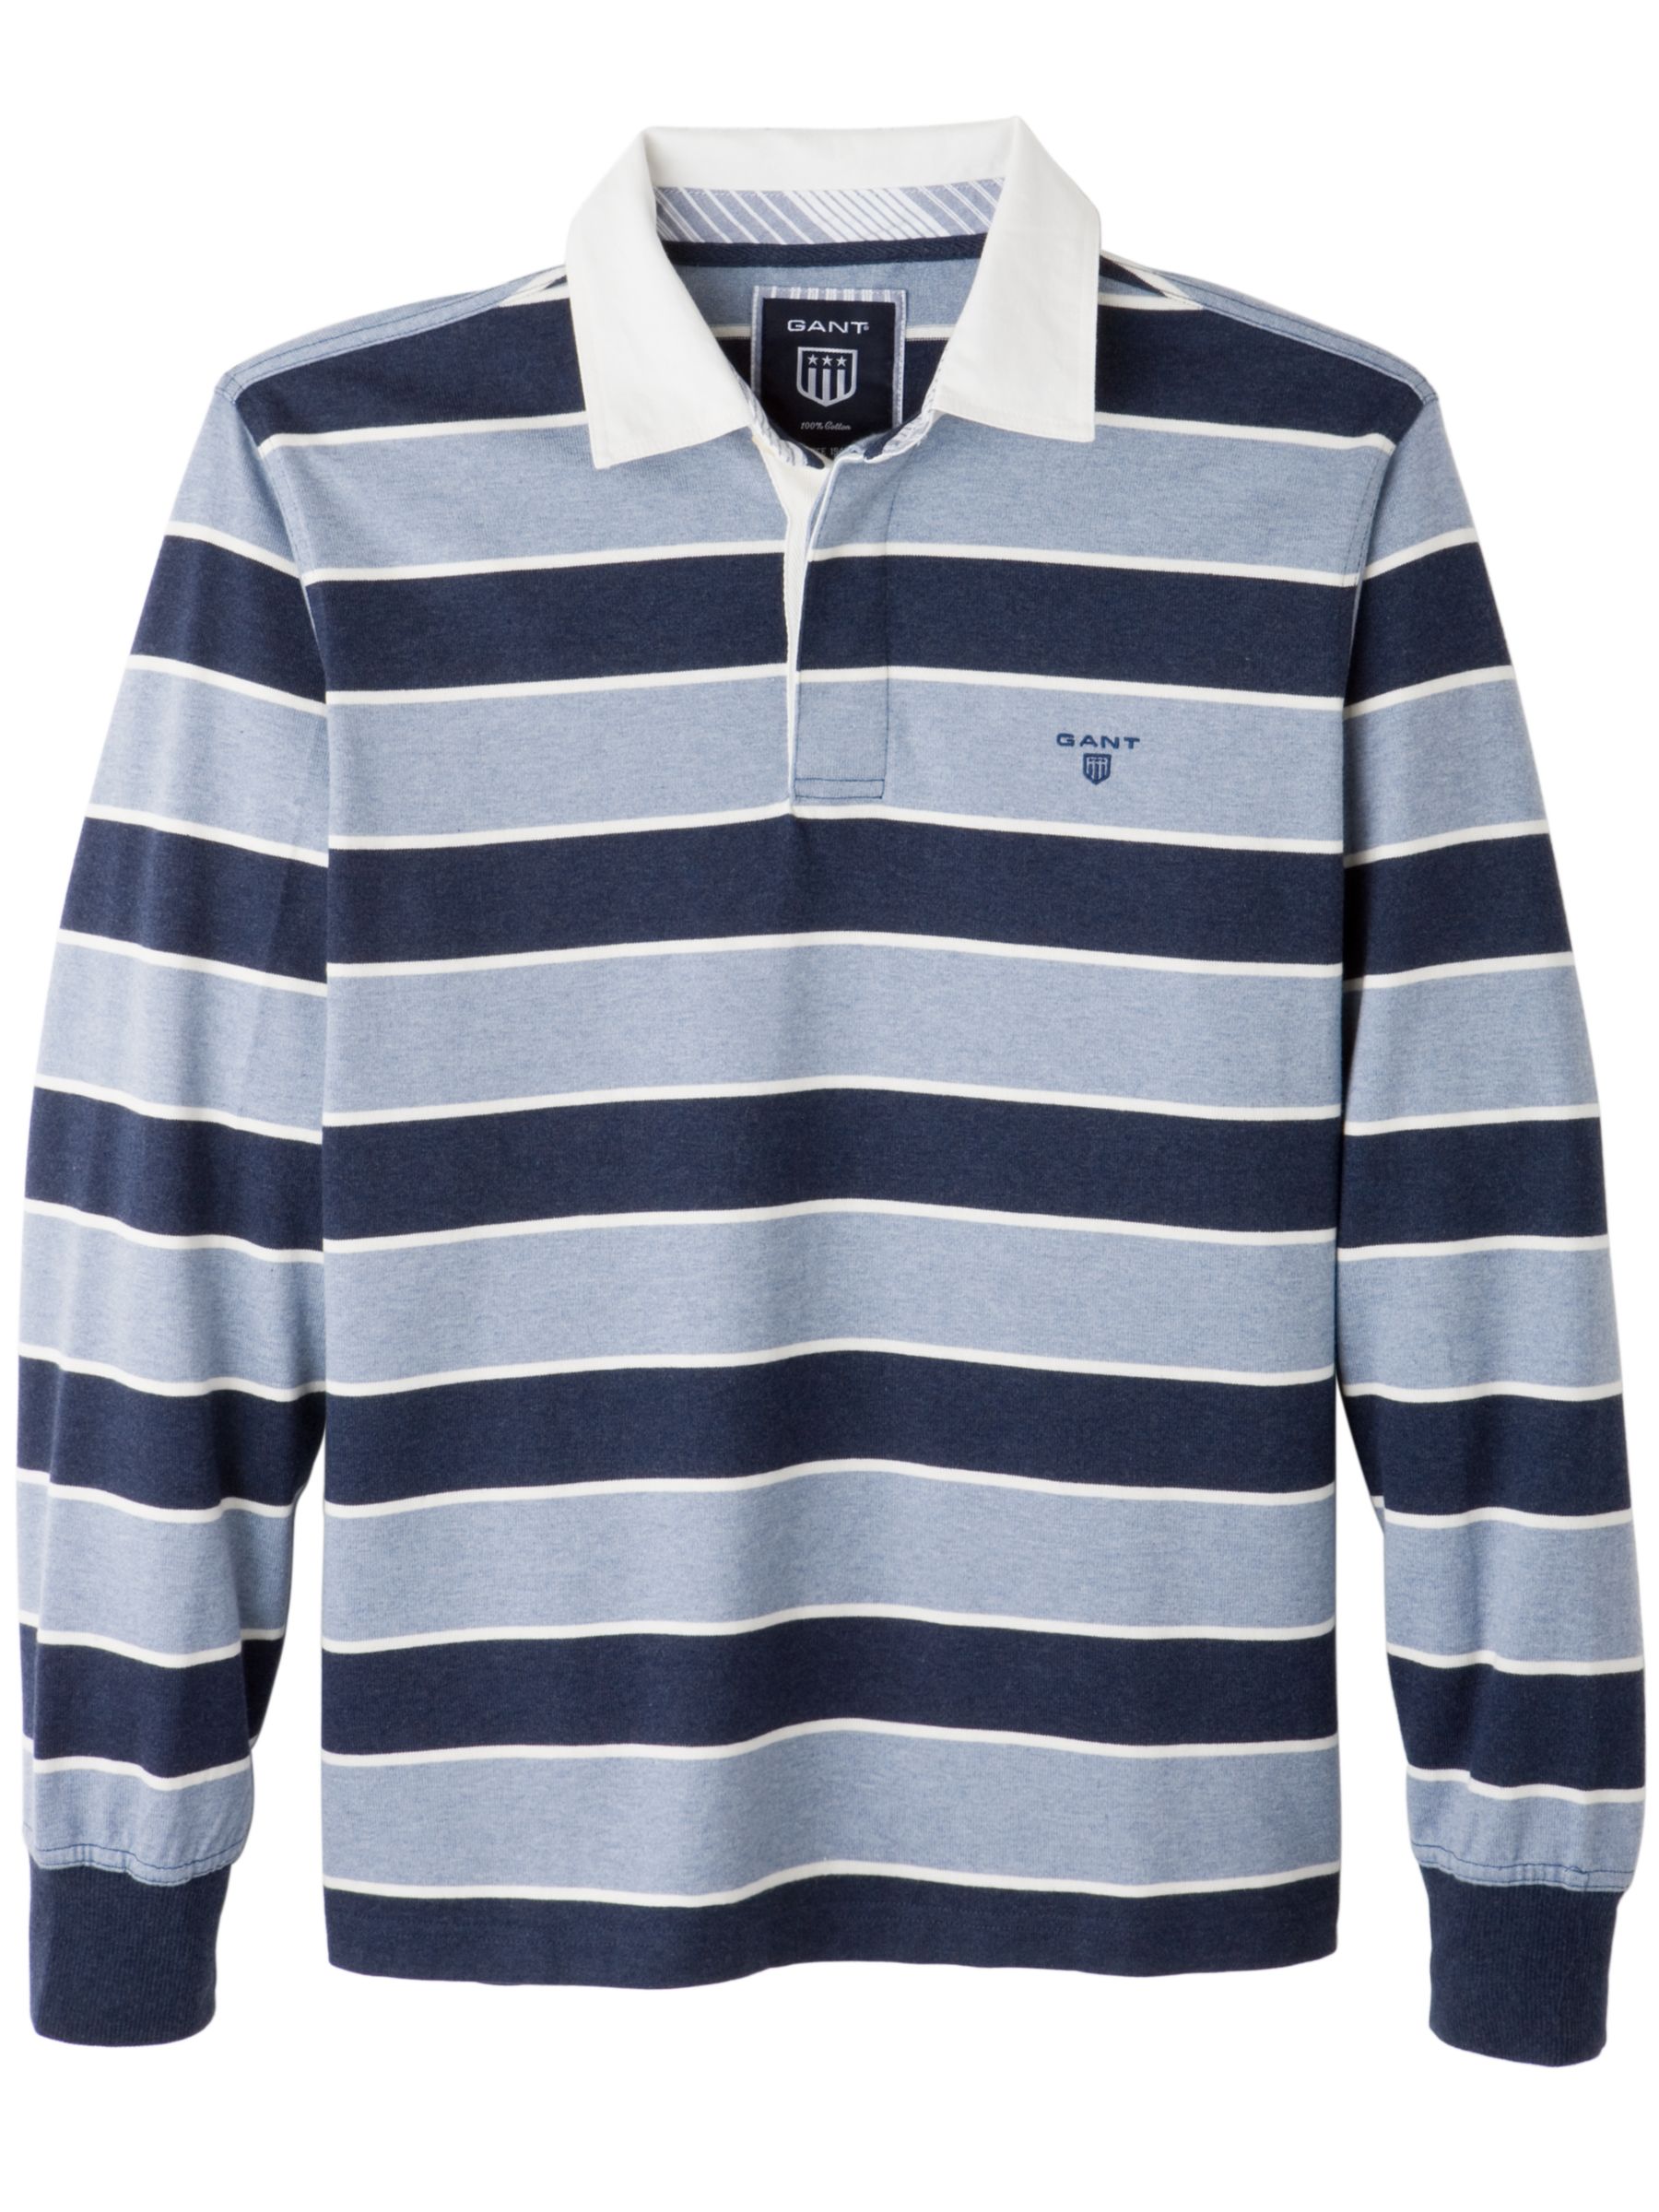 Gant Stripe Cotton Rugby Shirt, Blue, L